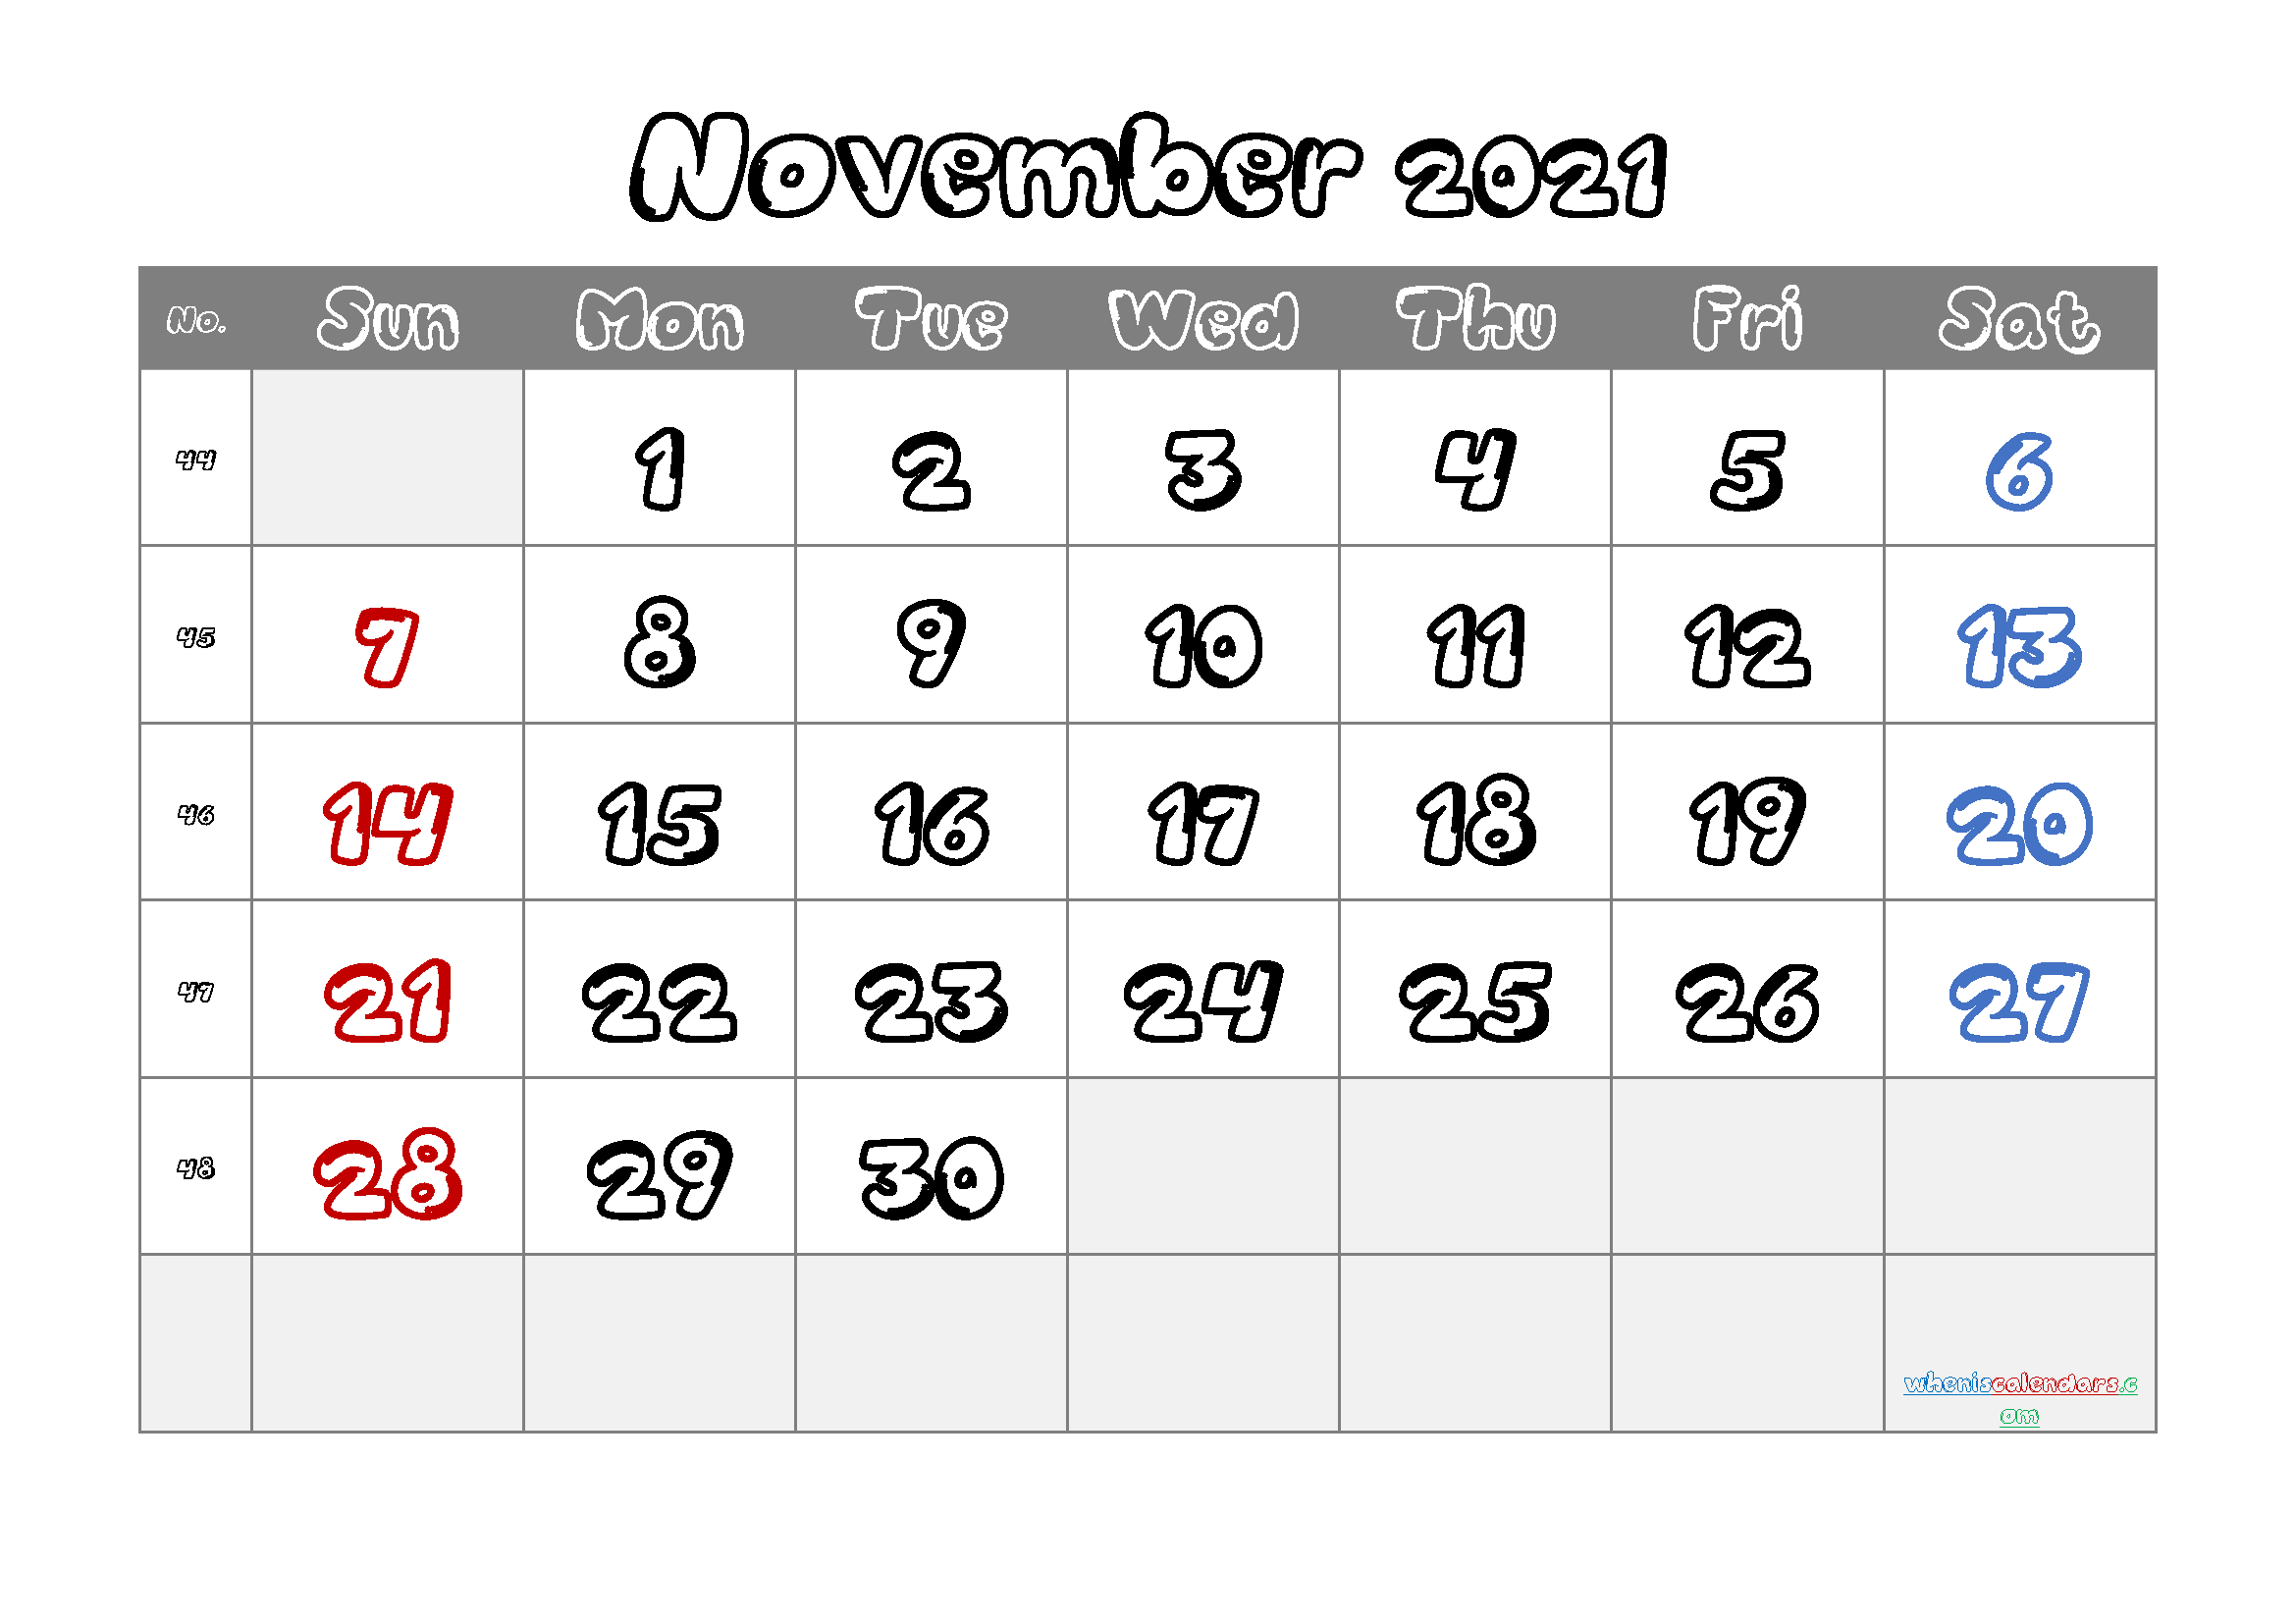 November 2021 Calendar Free Printable